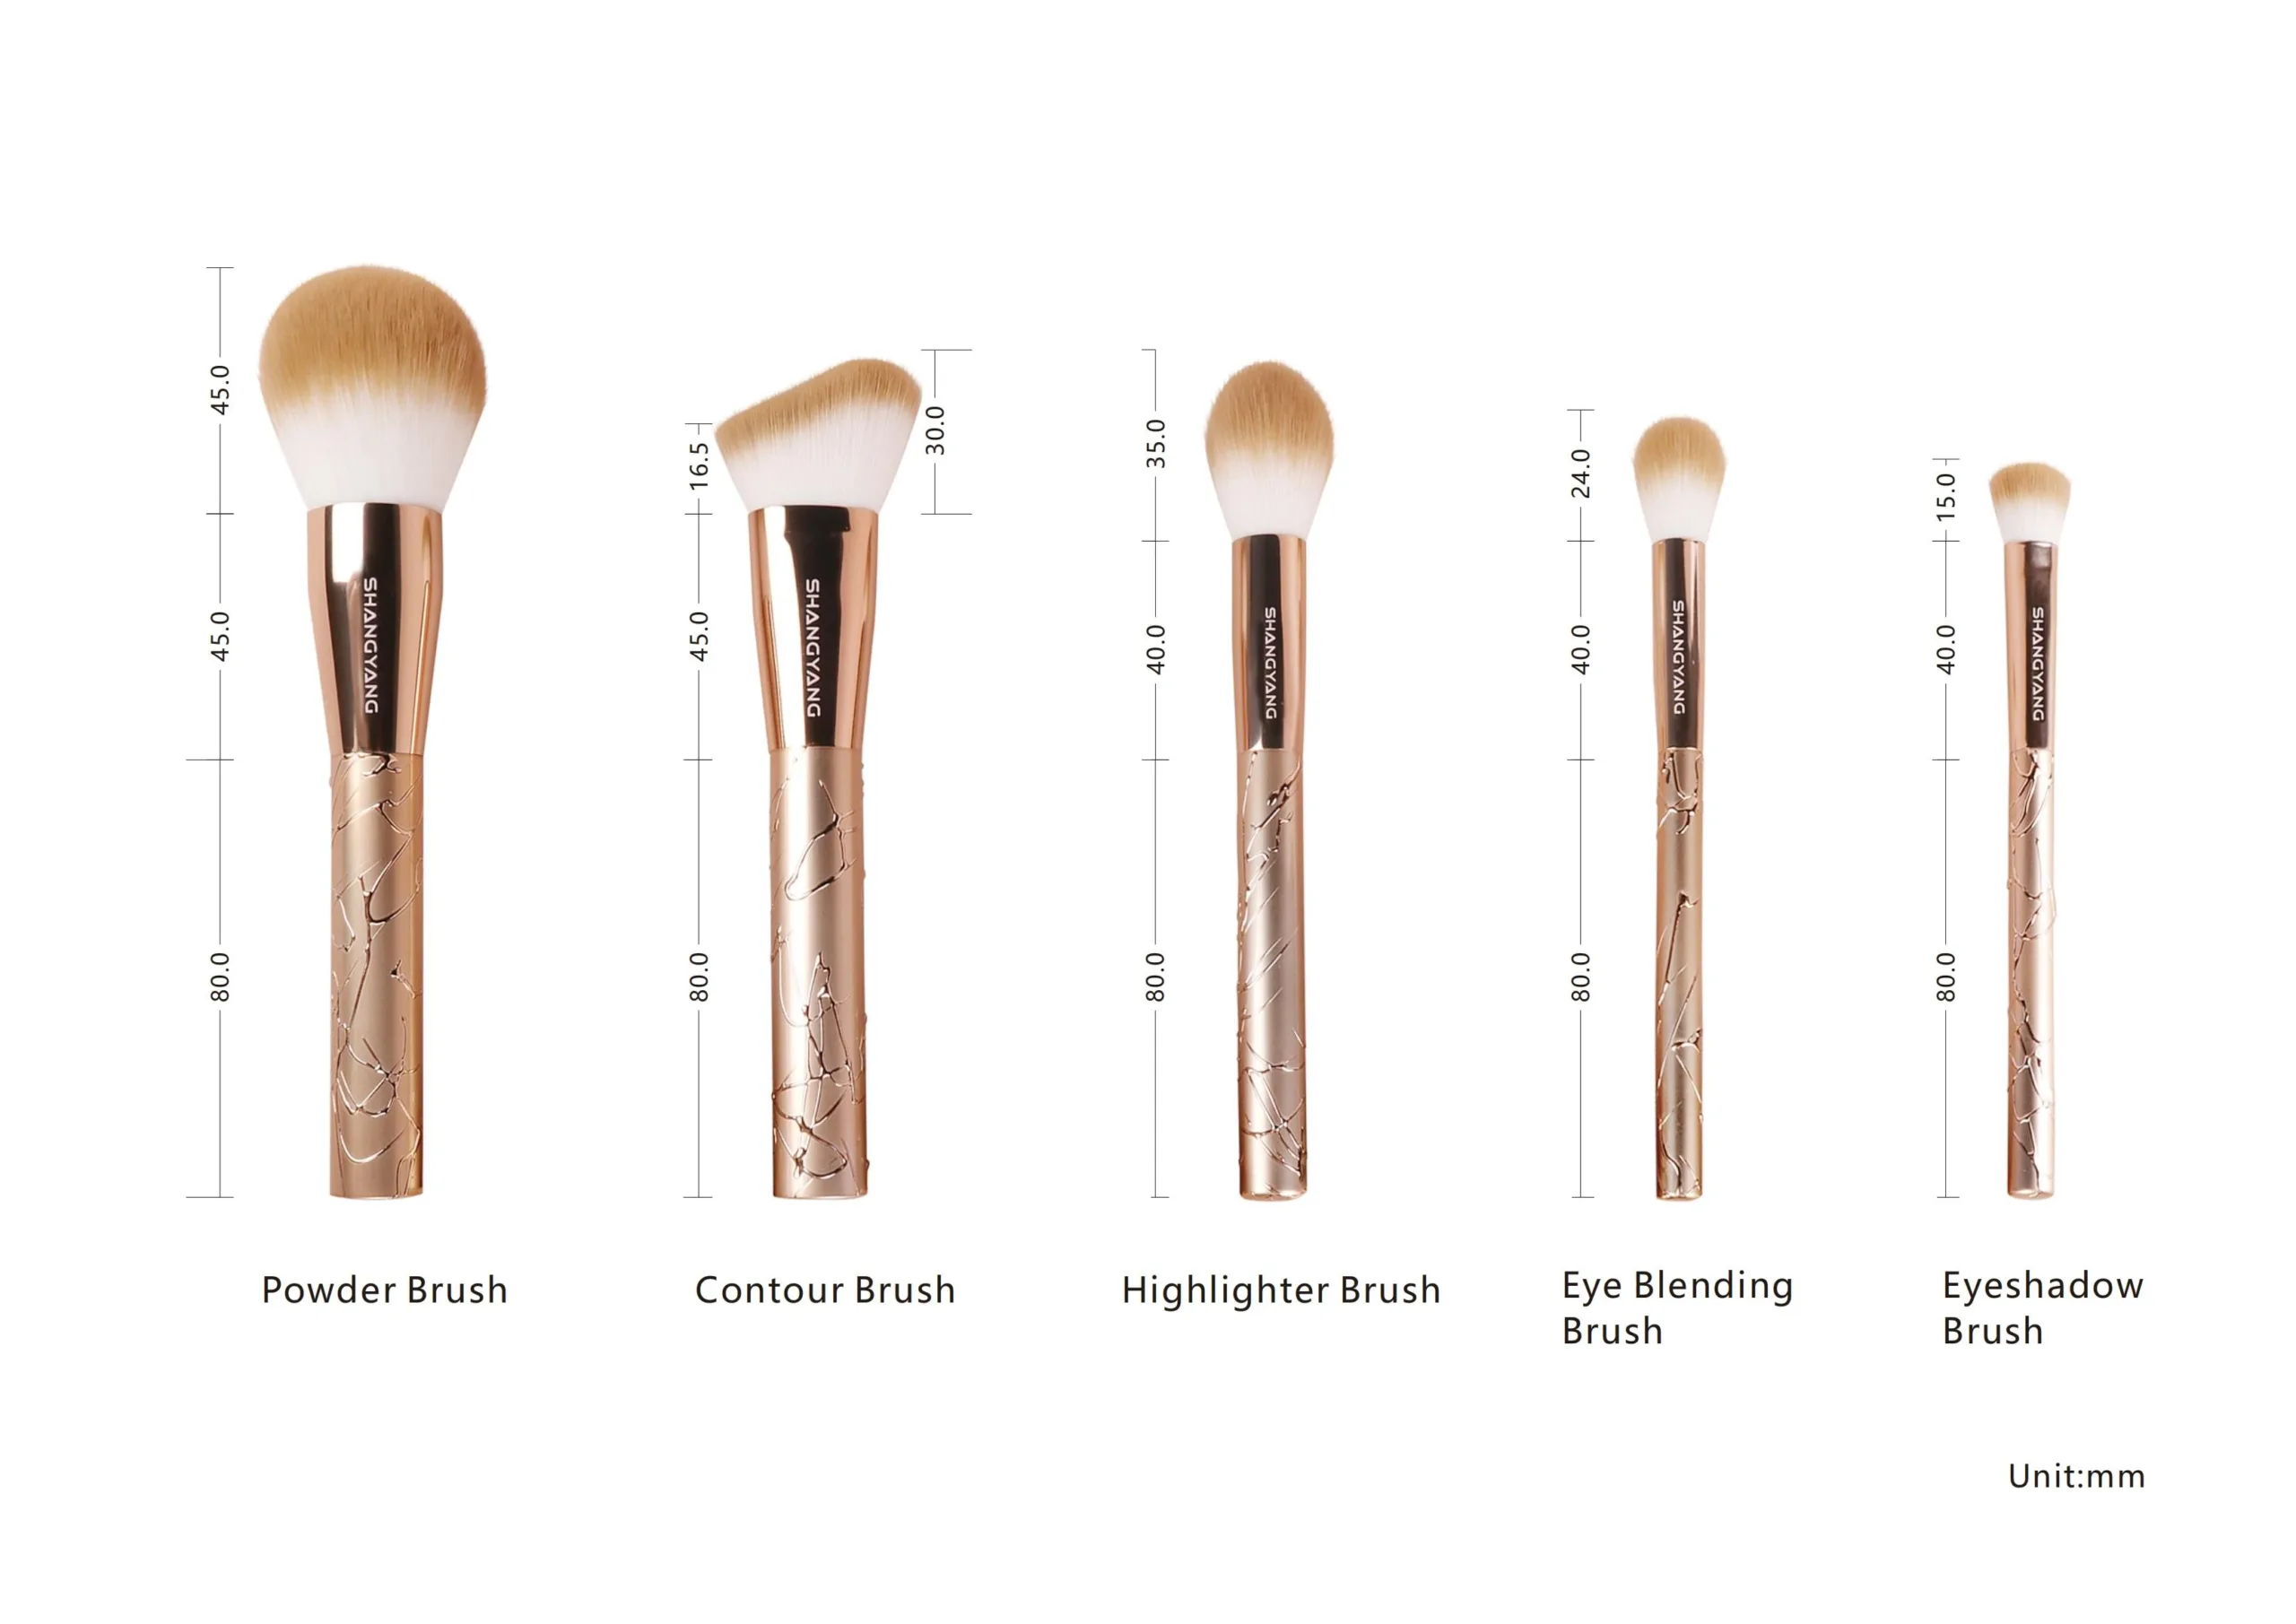 Makeup Revolution Ultra Metals Go Contouring Brush Set